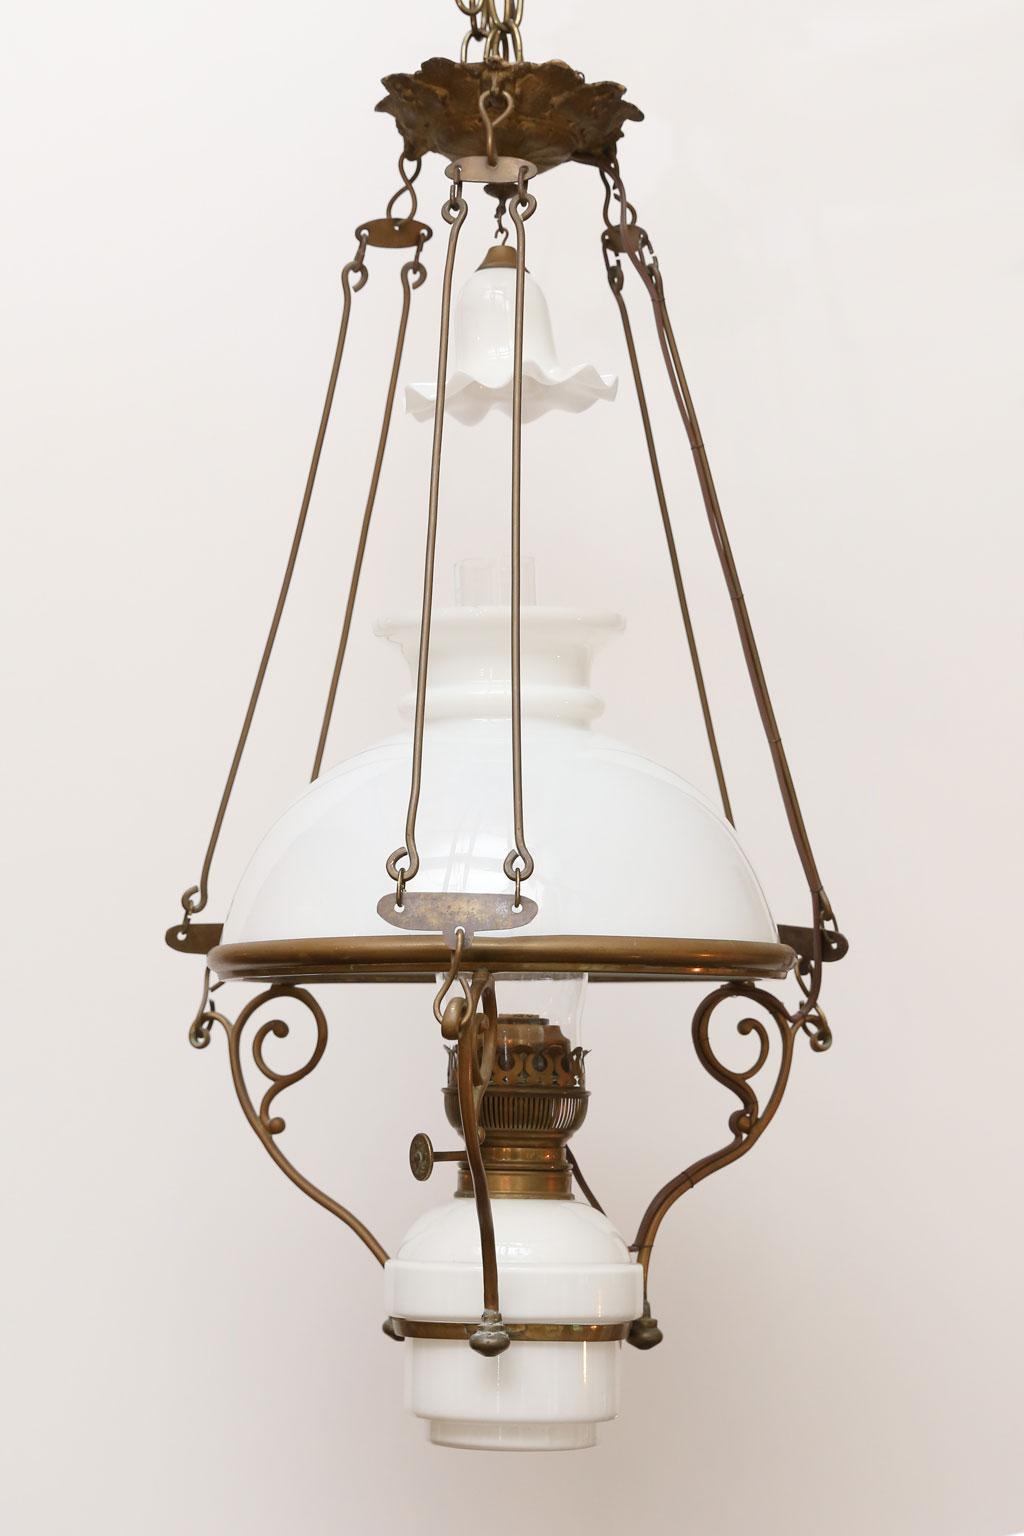 Art Nouveau Antique French Milk Glass and Brass Hall Lantern